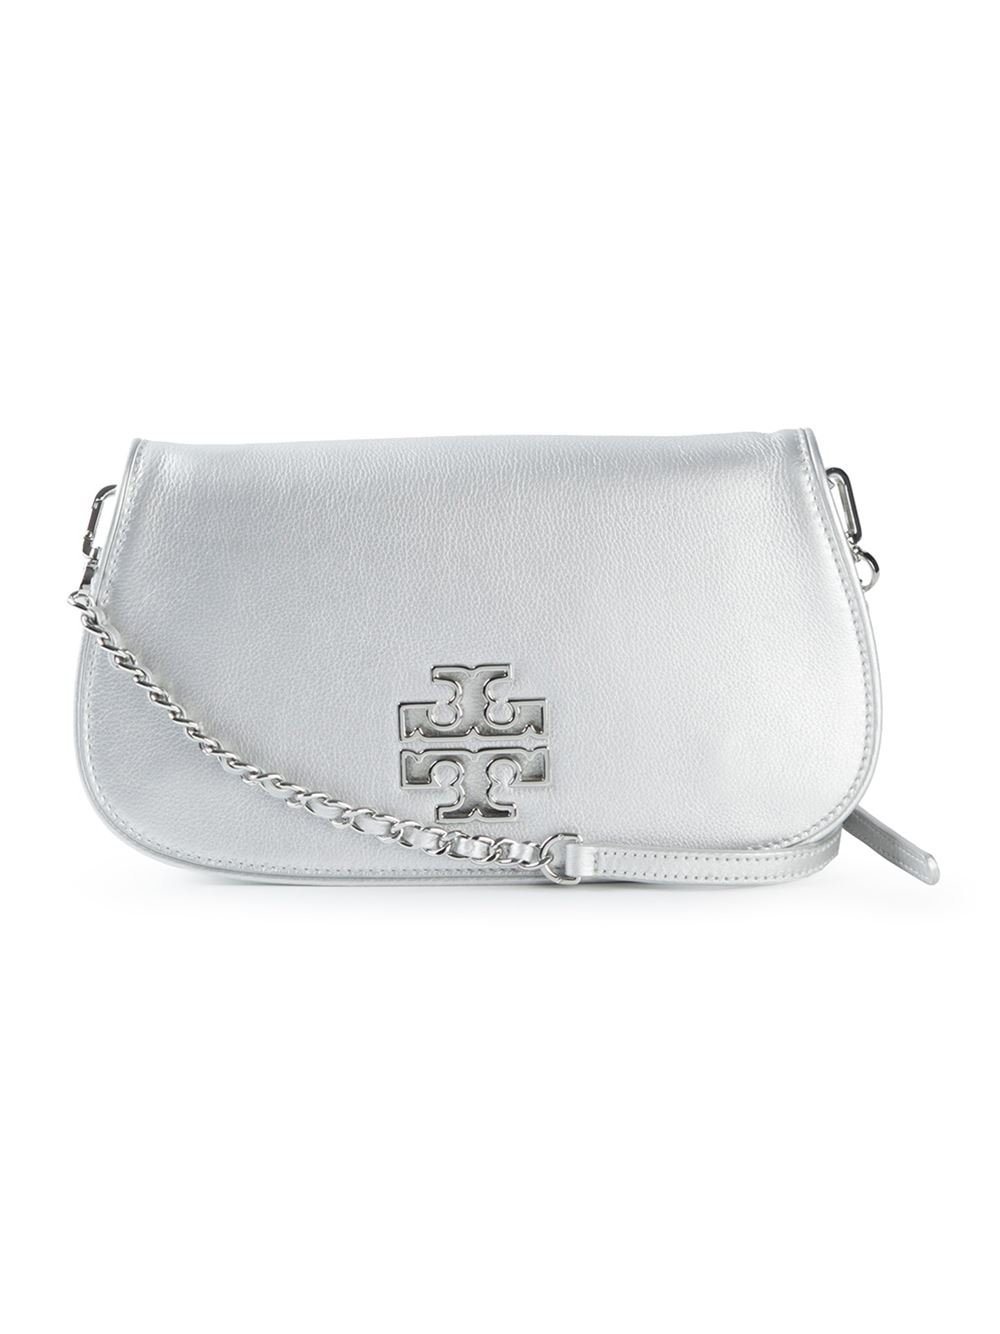 Tory Burch Logo Leather Cross-Body Bag in Silver (metallic) | Lyst